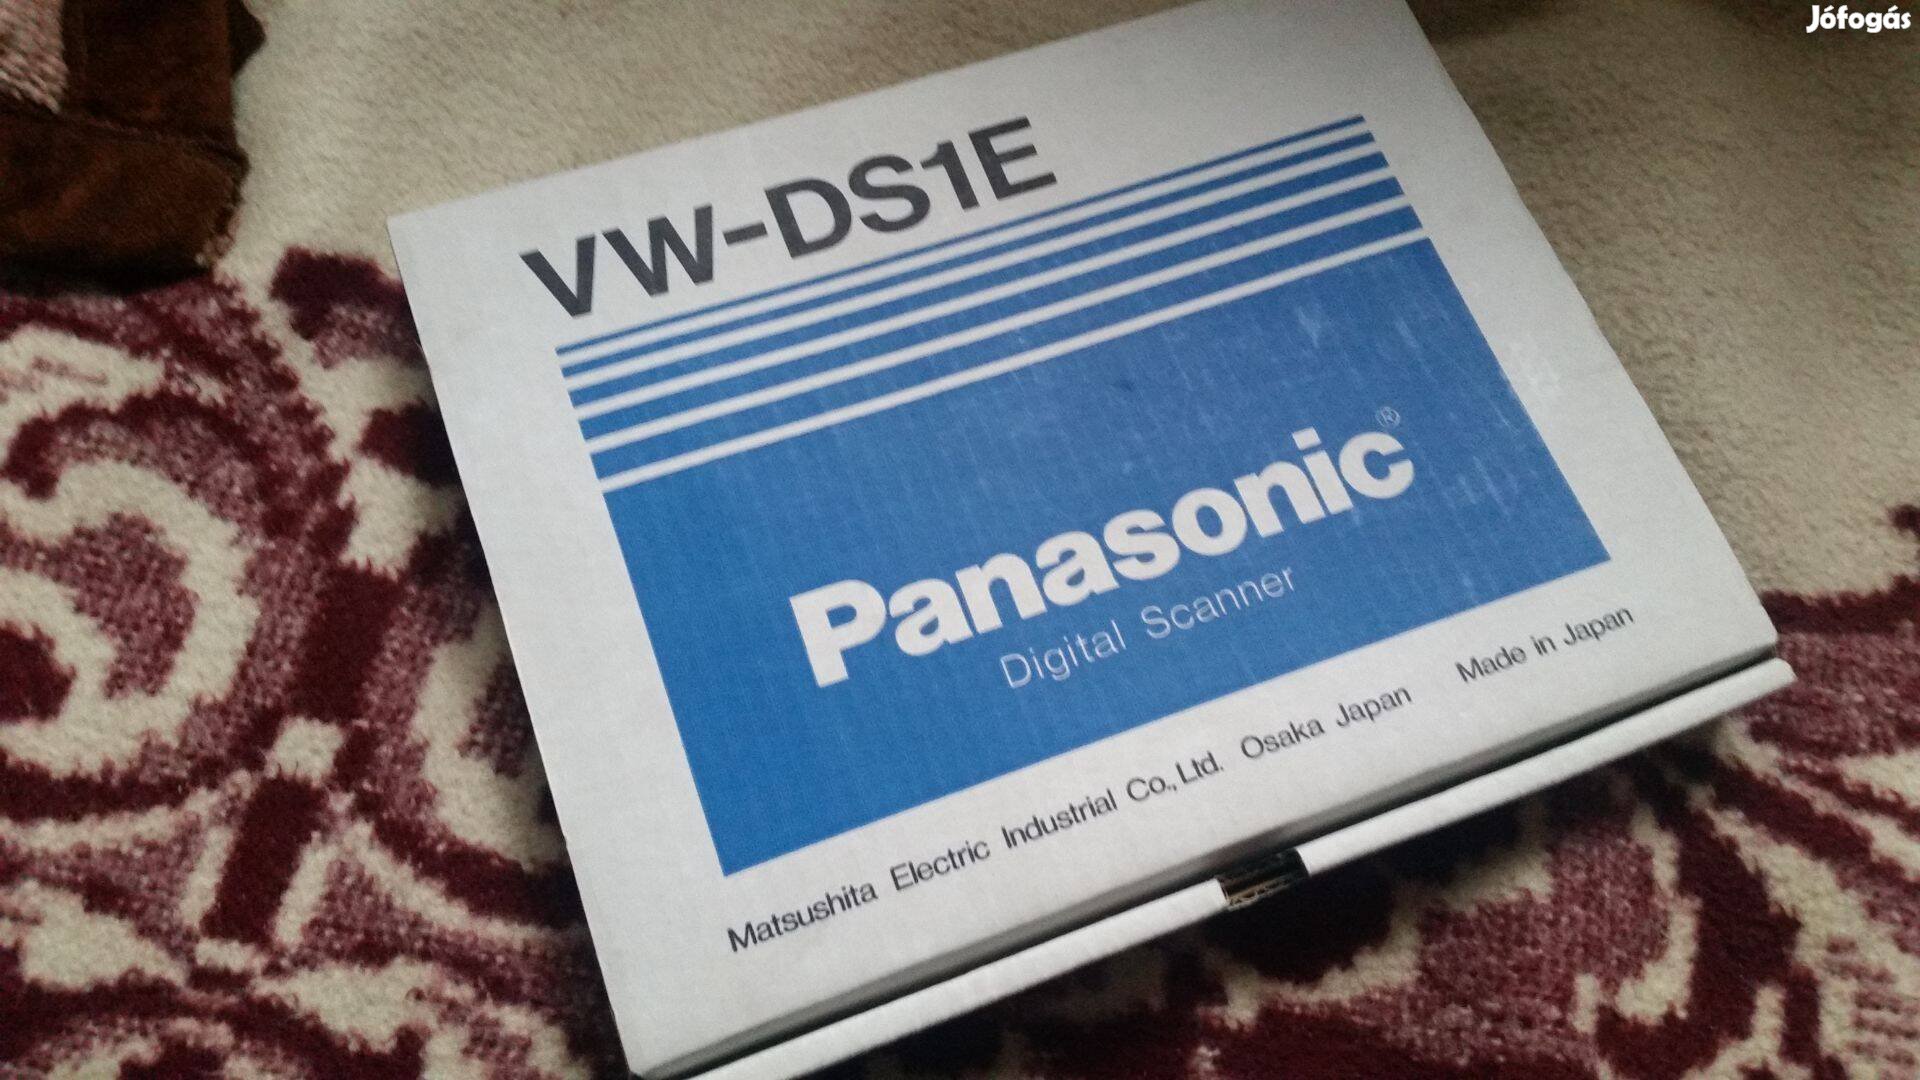 Panasonic VW-DS1E Digital Scanner Bar Code Reader -új, gyűjtőknek